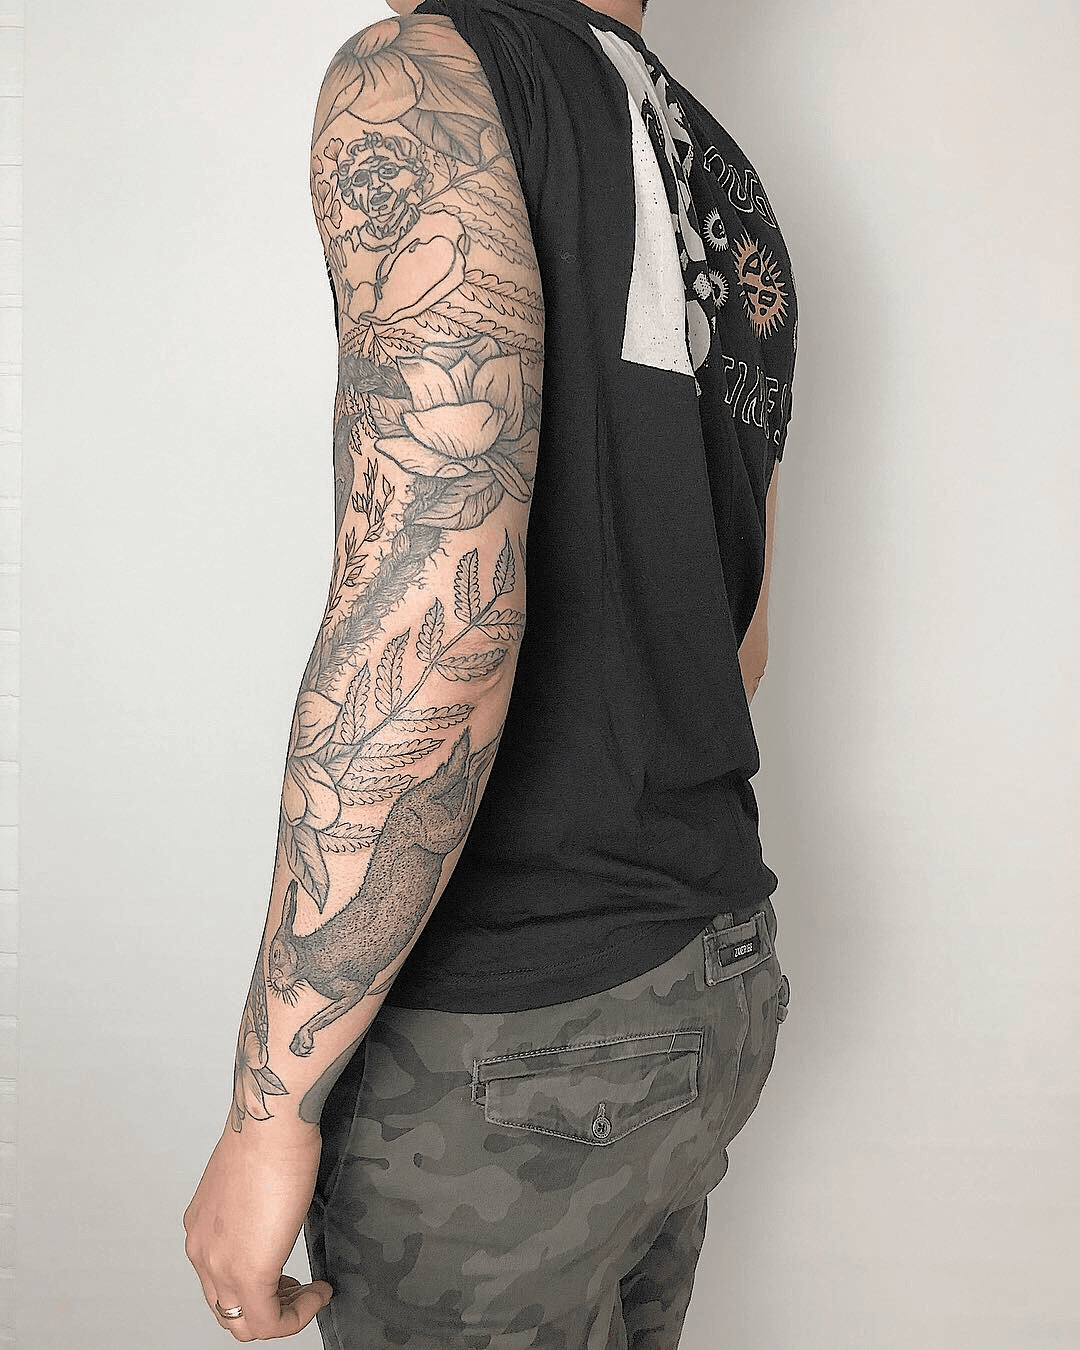 LegInDairy by Michelle Bunny Manhart at Scarlet Letter Tattoo in Georgia   rtattoo